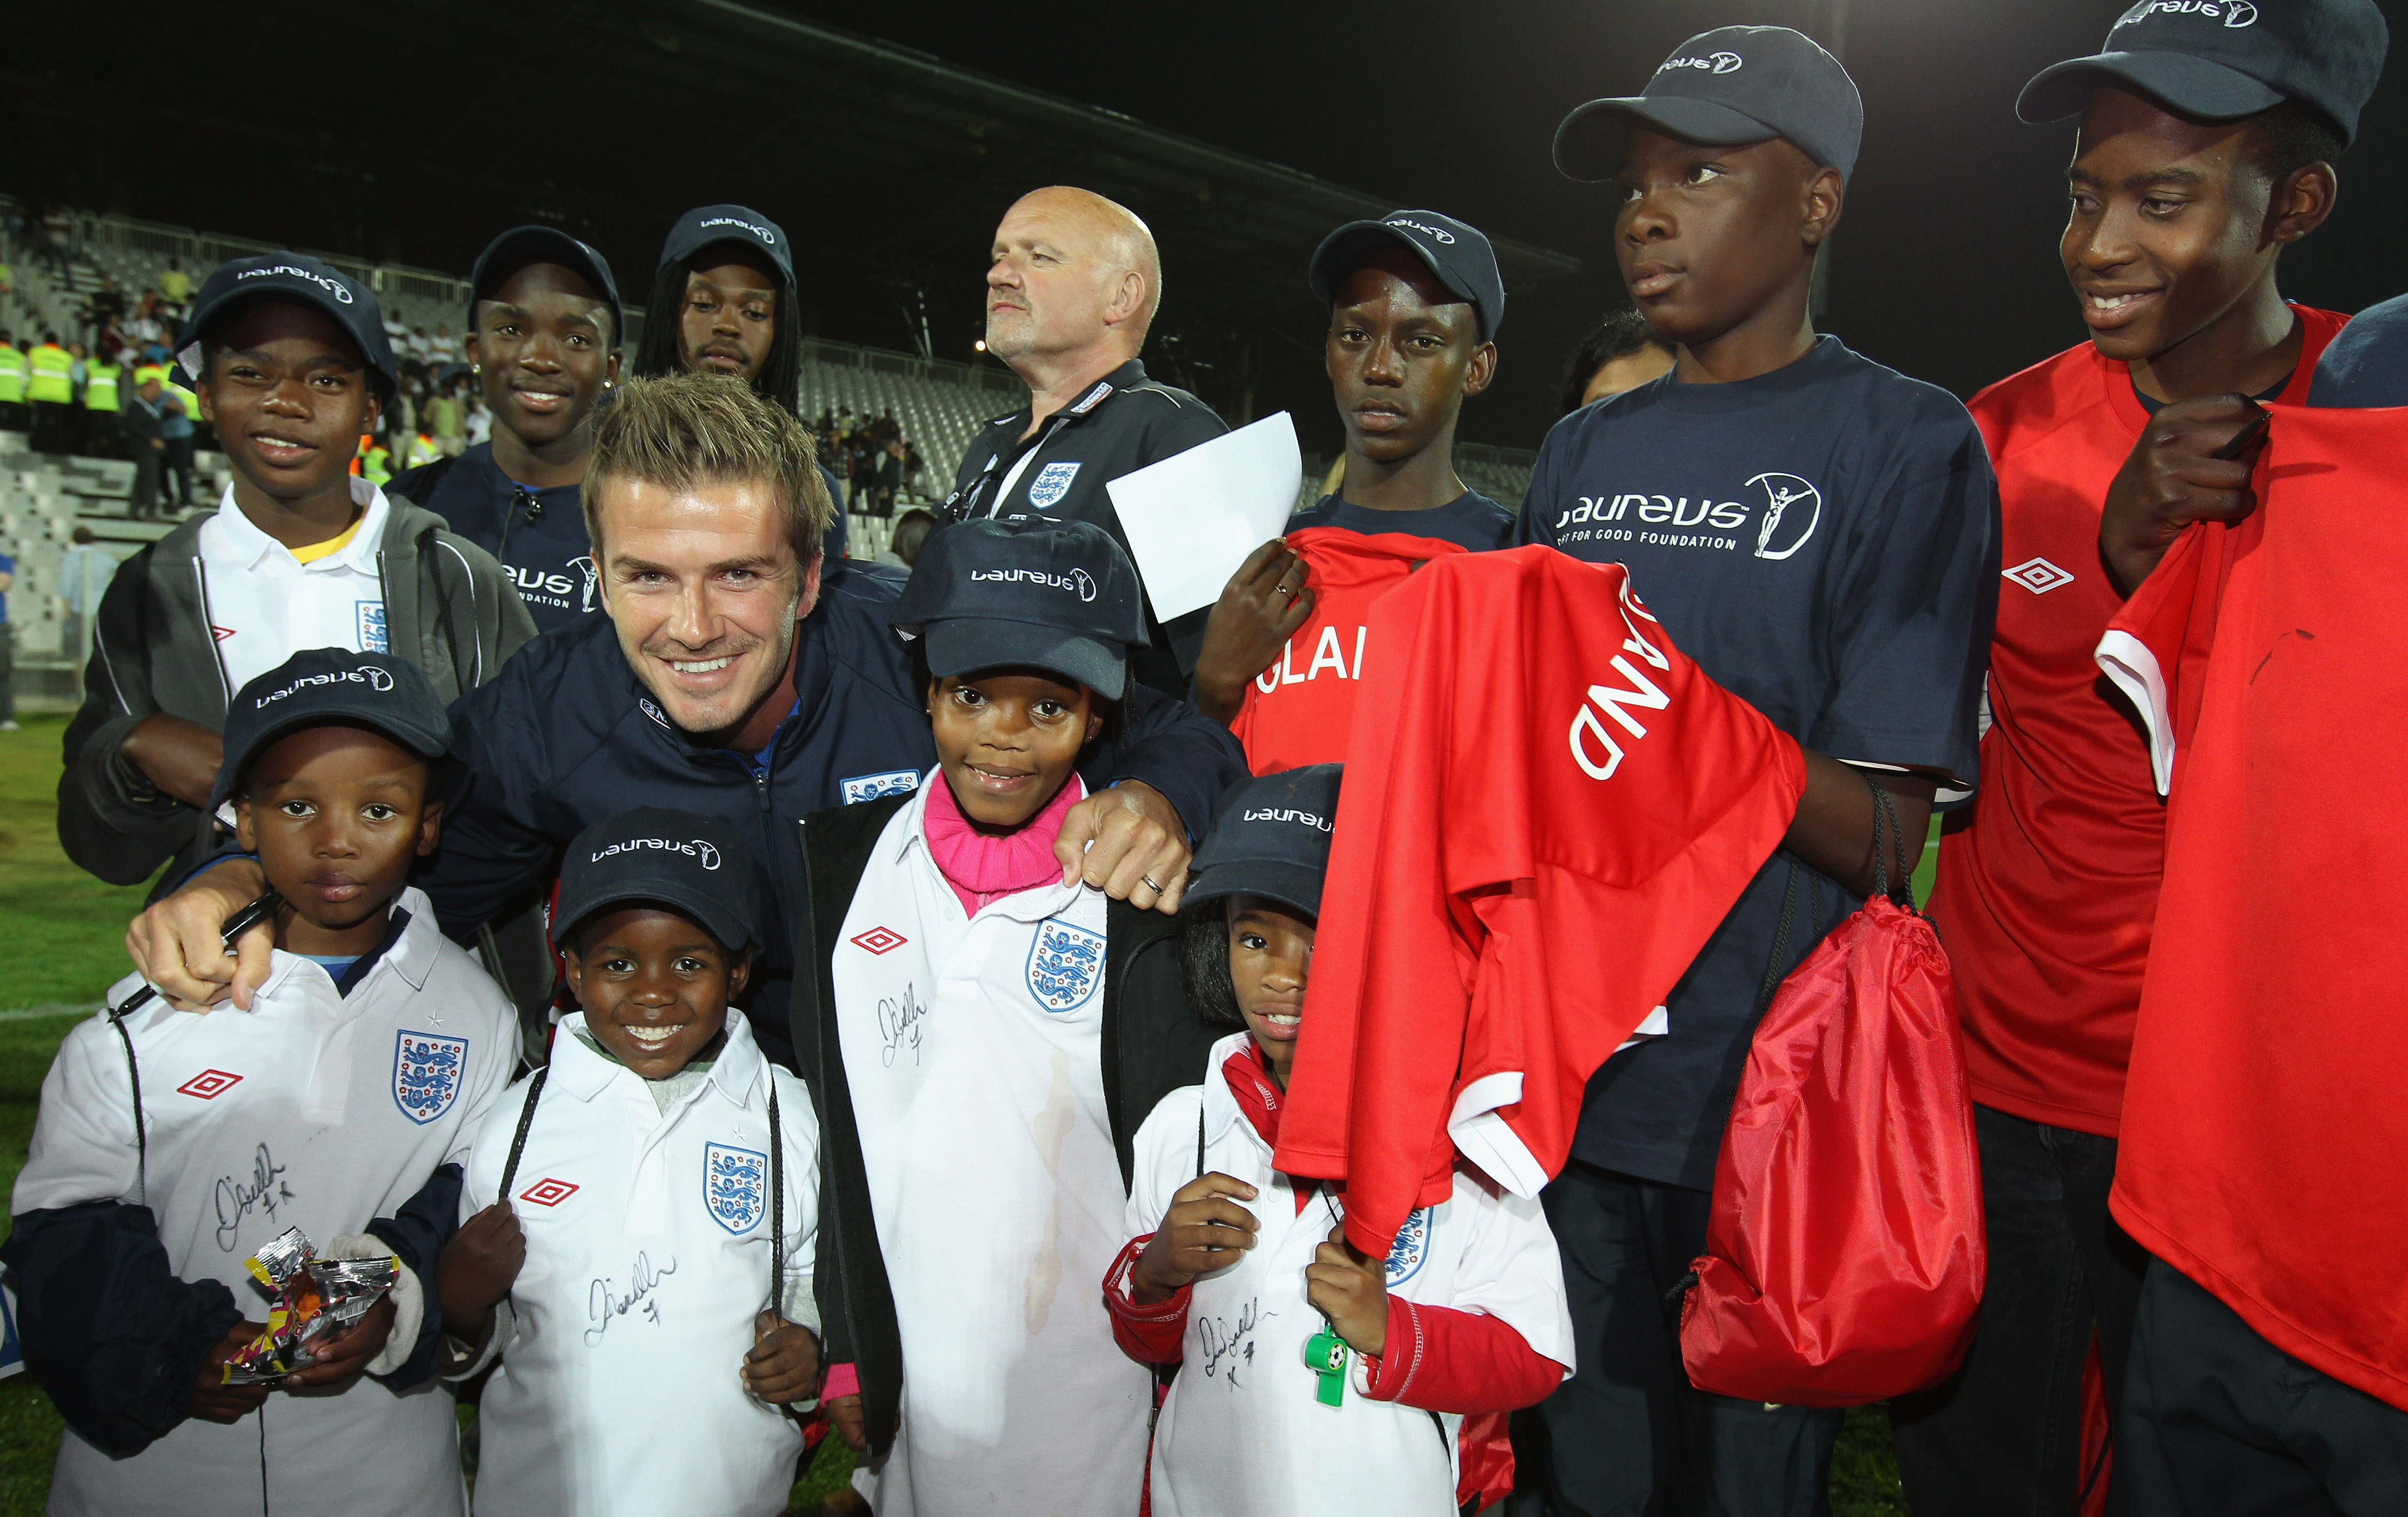 David Beckham, Laureus, Laureus Sport for Good, South Africa